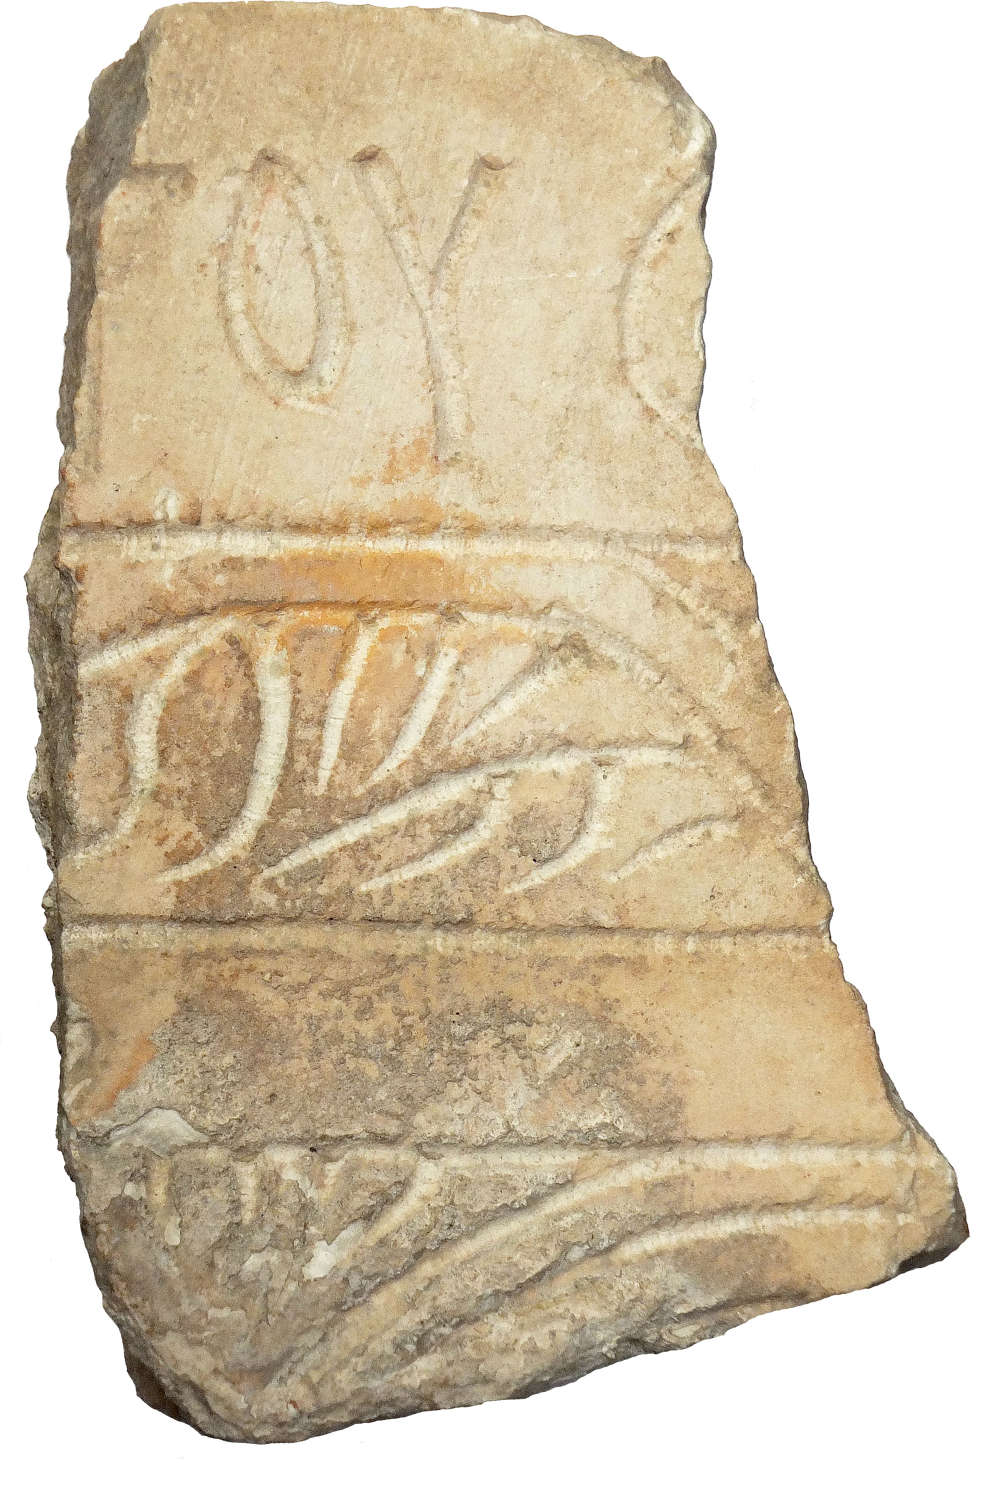 A Byzantine engraved sub-rectangular limestone fragment